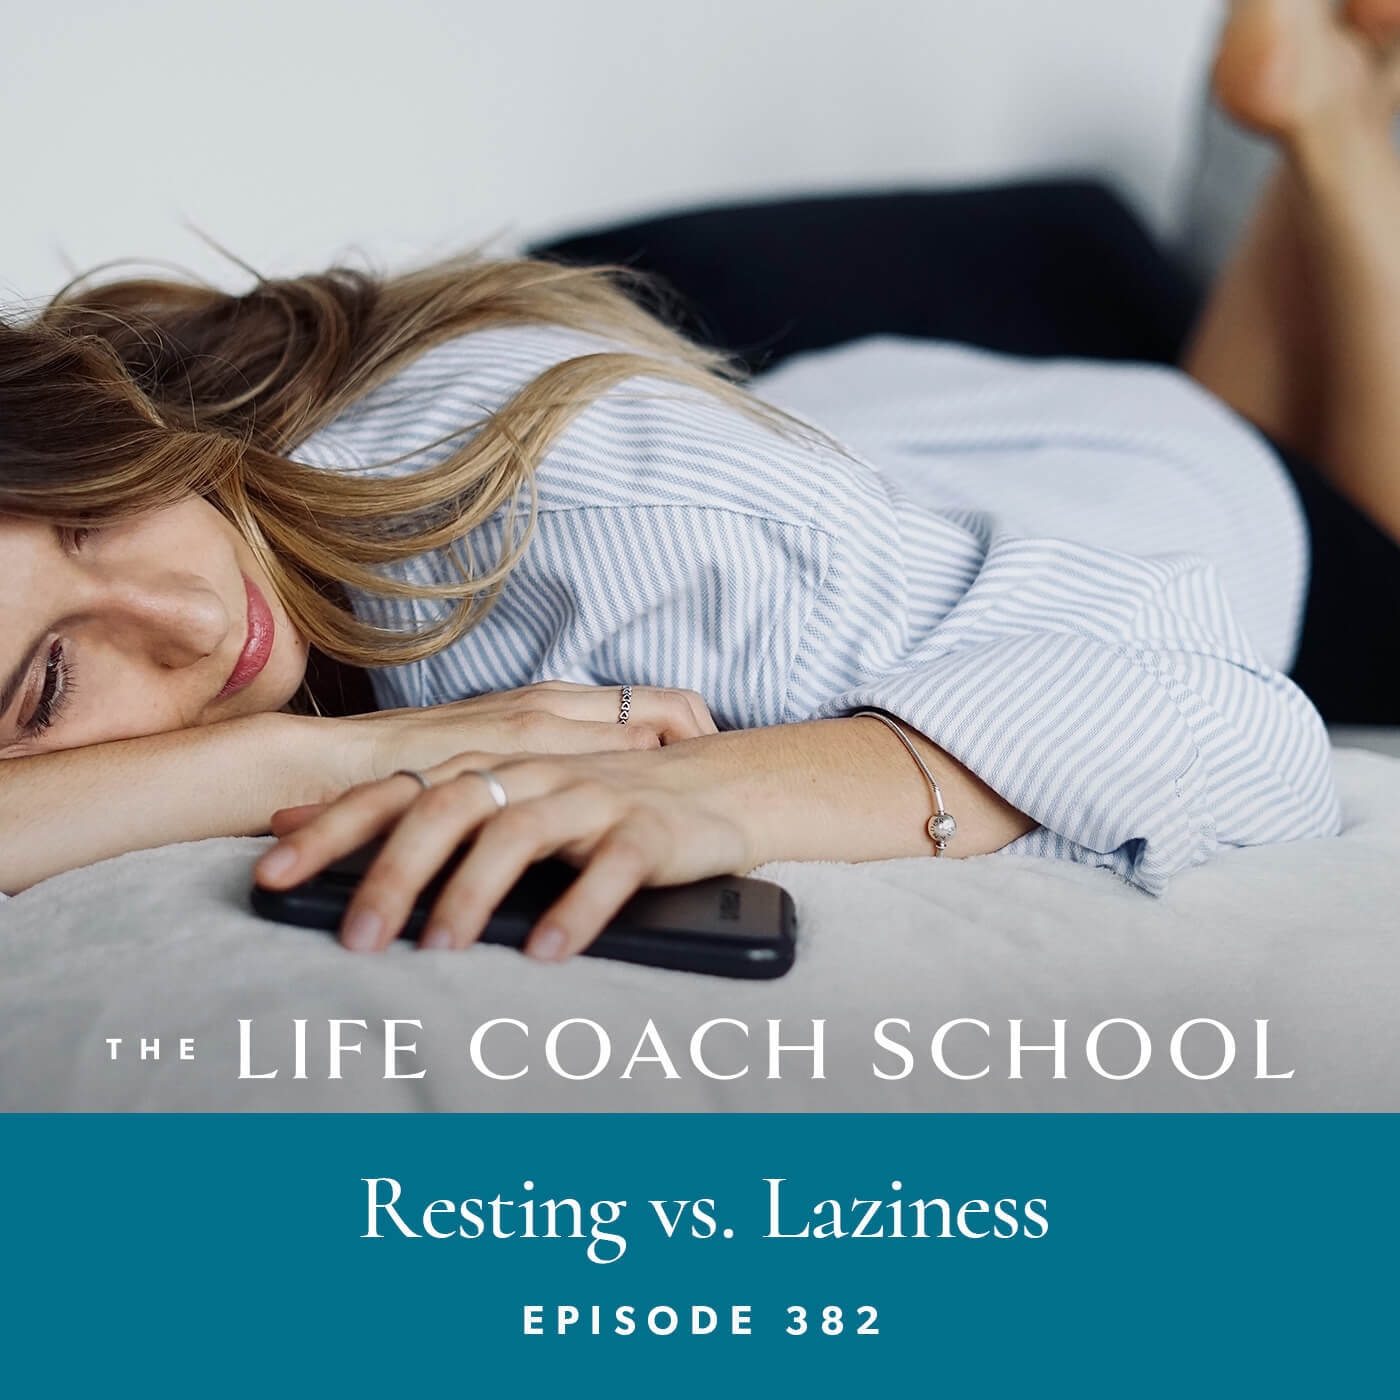 The Life Coach School Podcast with Brooke Castillo | Resting vs. Laziness